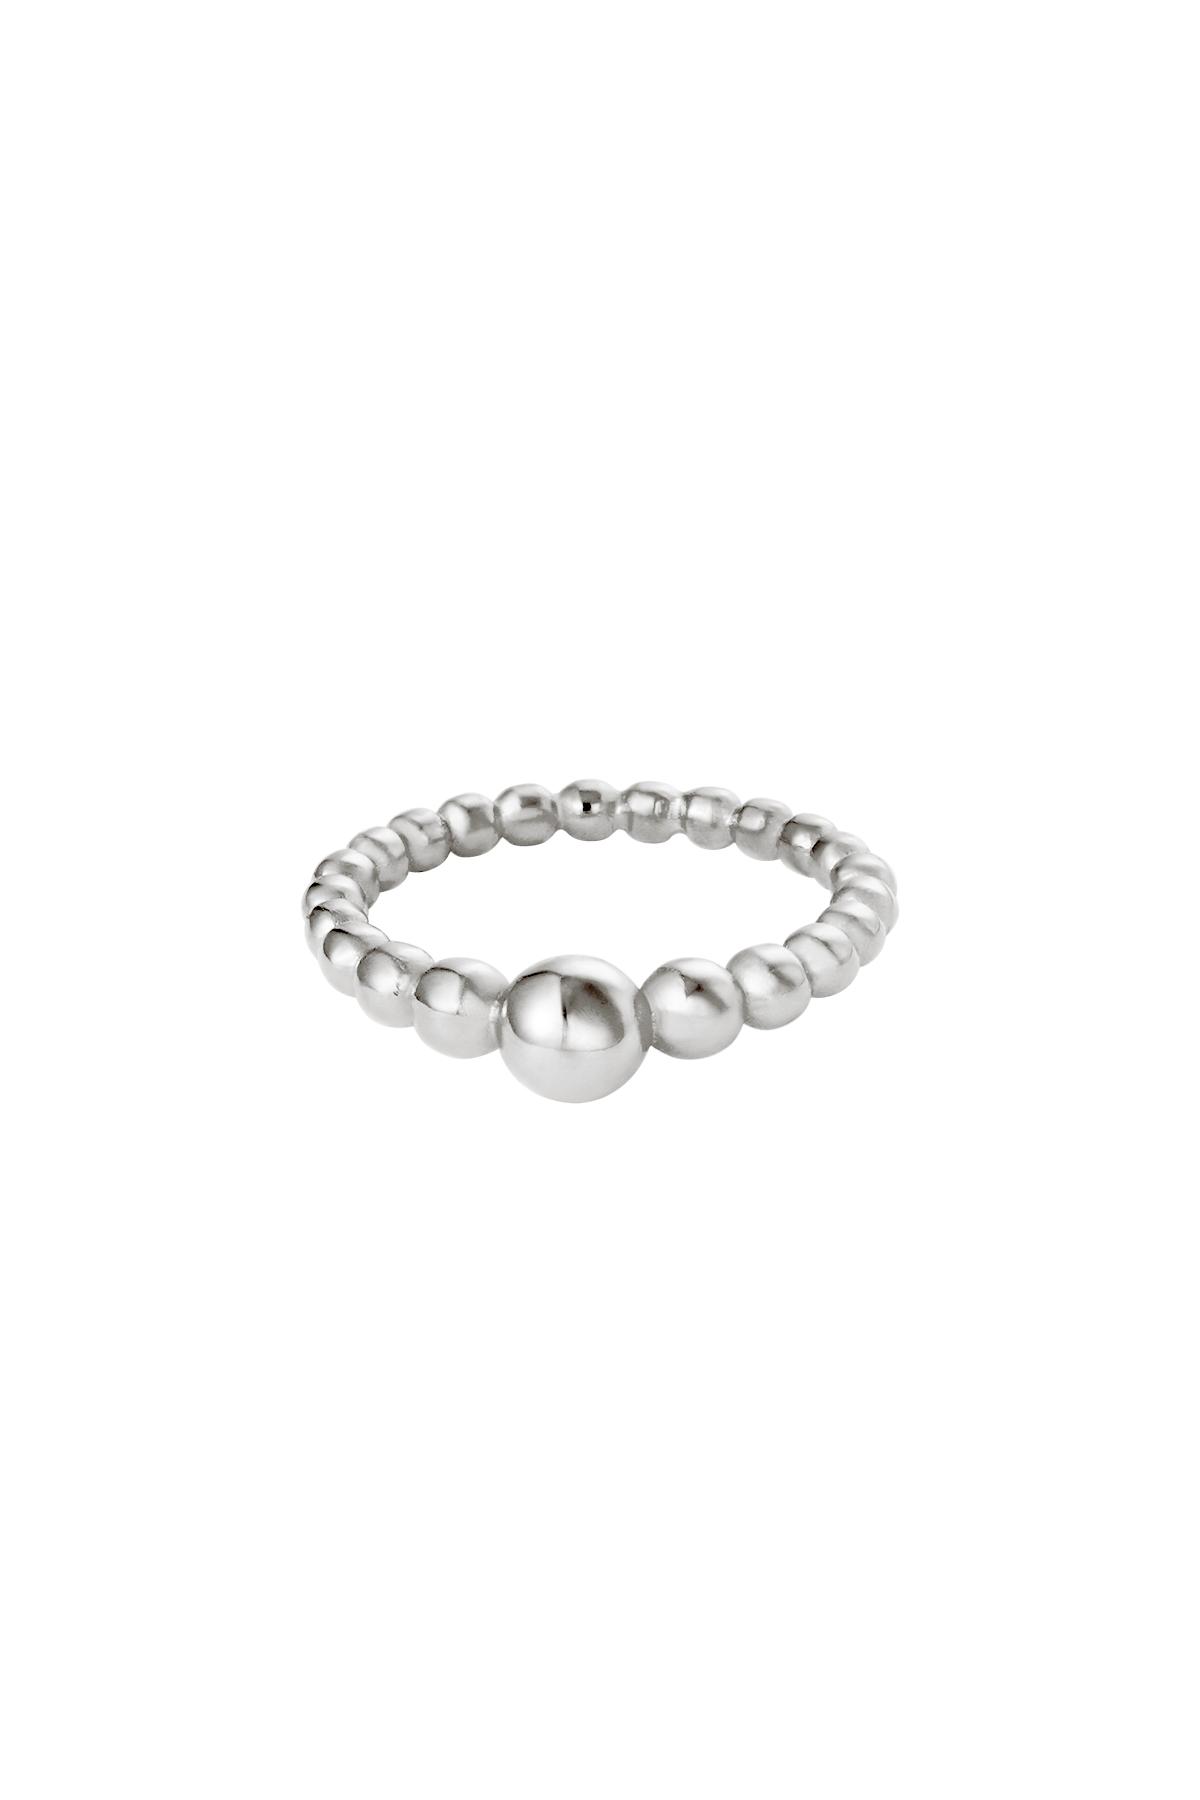 Ring Steel Pearls Silver Stainless Steel 16 h5 